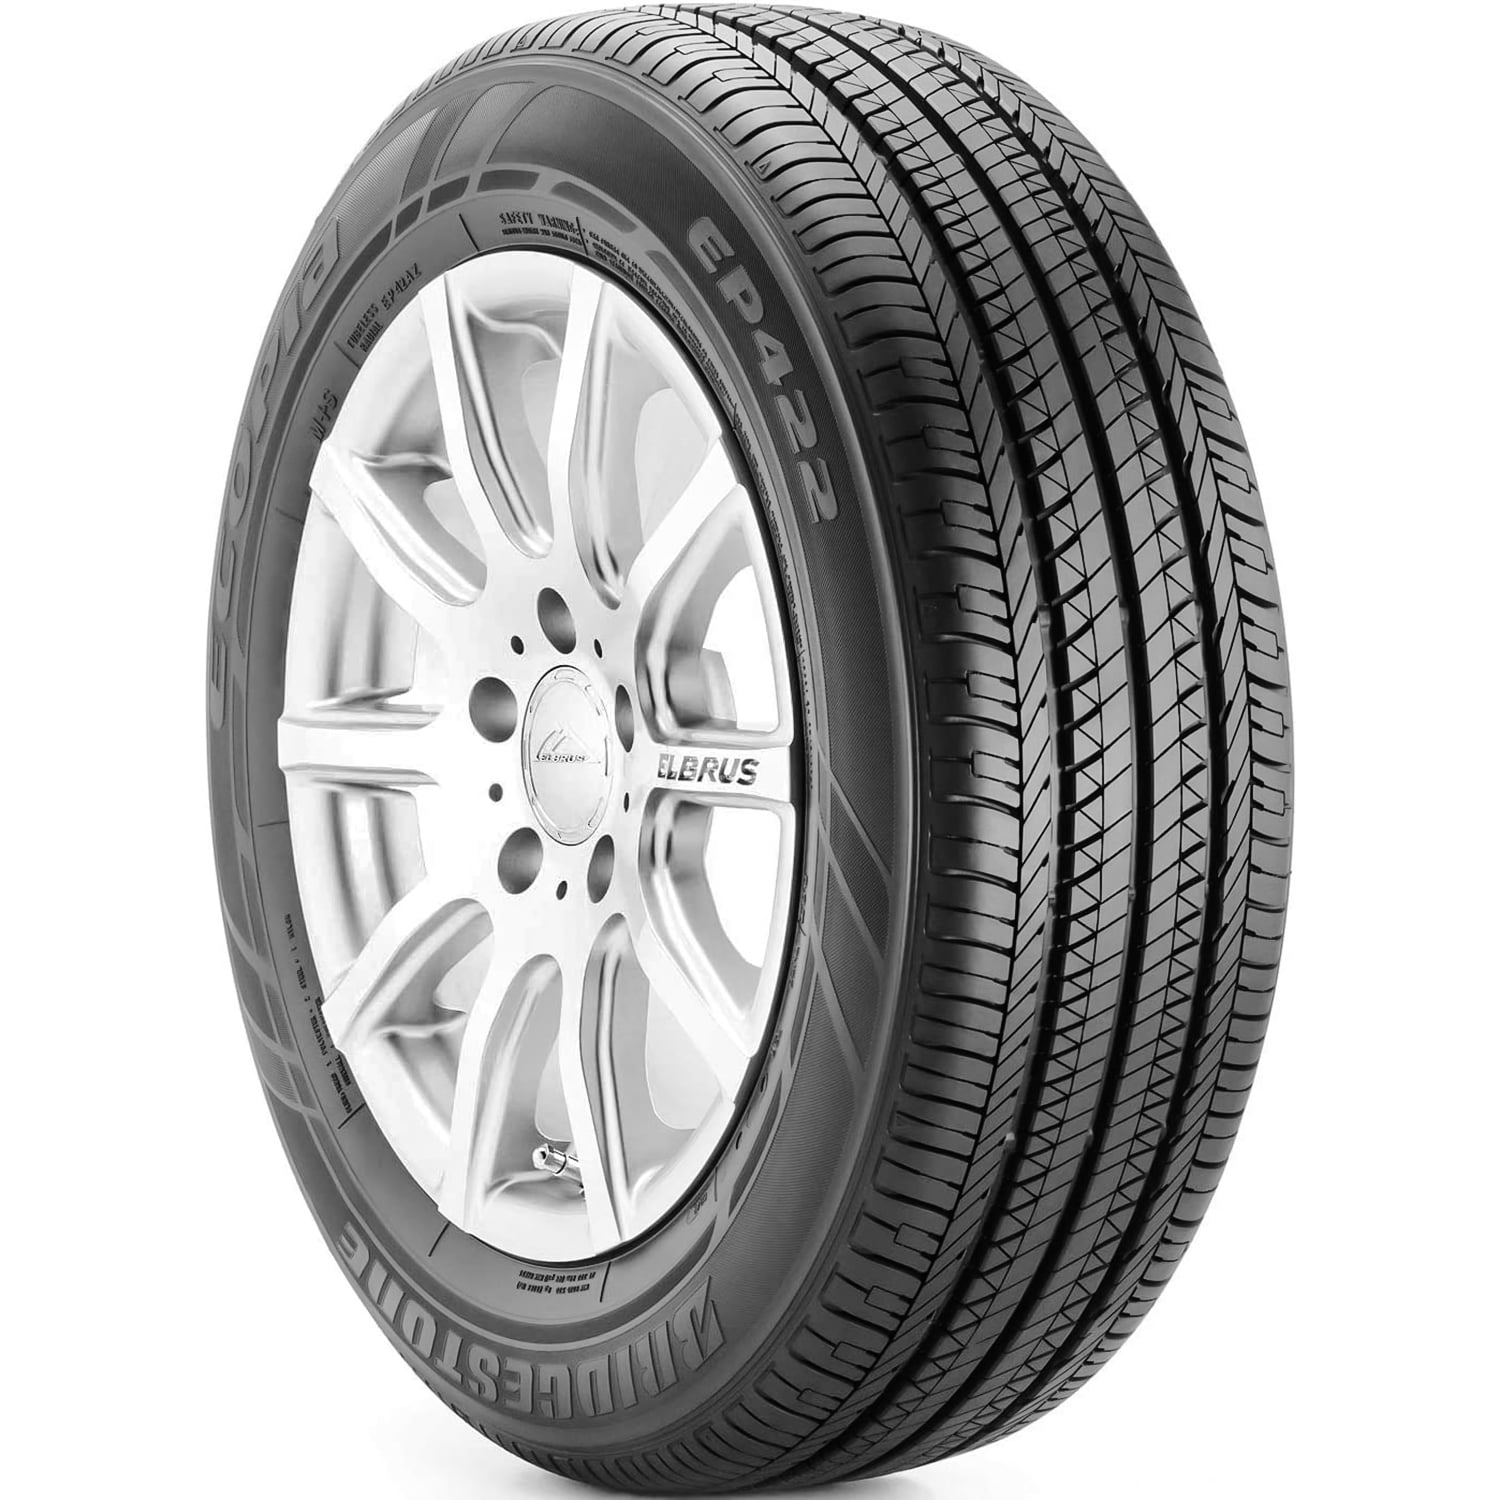 Bridgestone Ecopia EP422 185/65R15 86H AS All Season A/S Tire